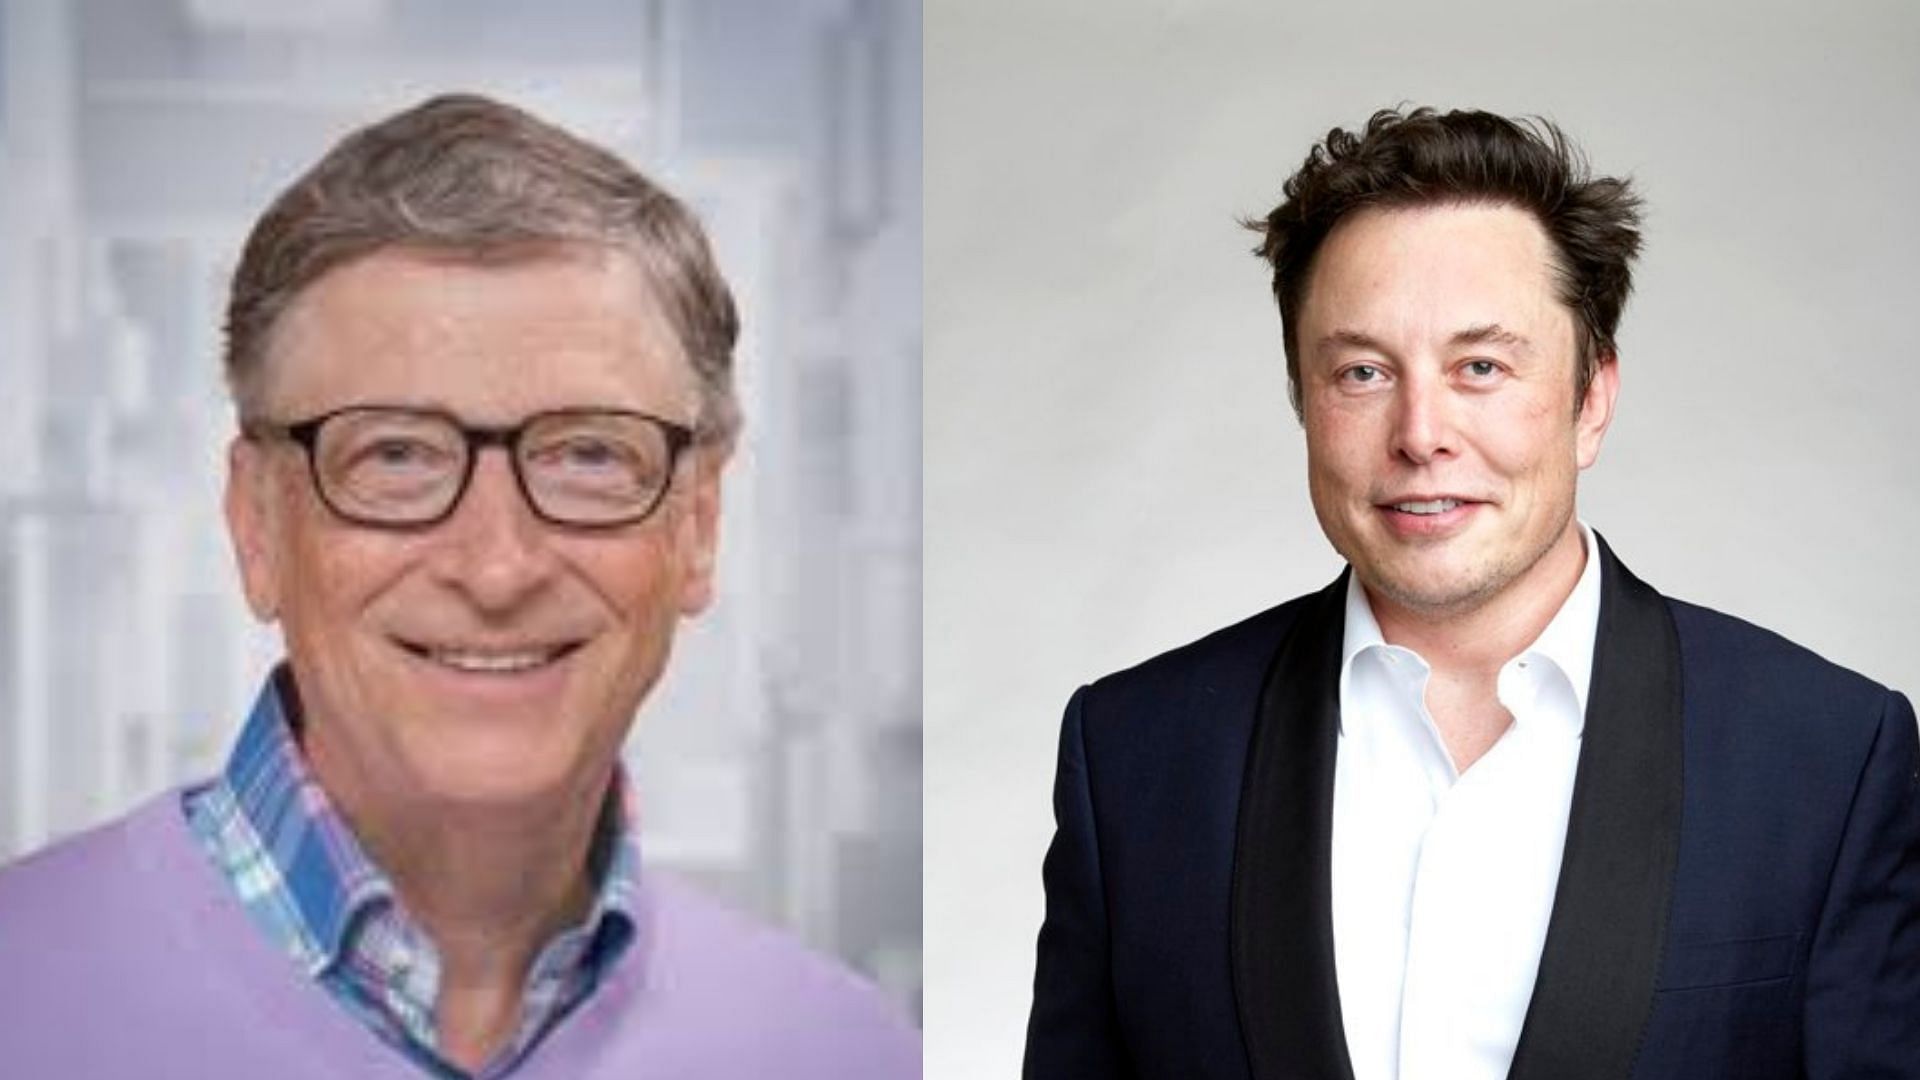 Elon Musk Overtakes Bill Gates as 2nd Richest, Twitter Reacts